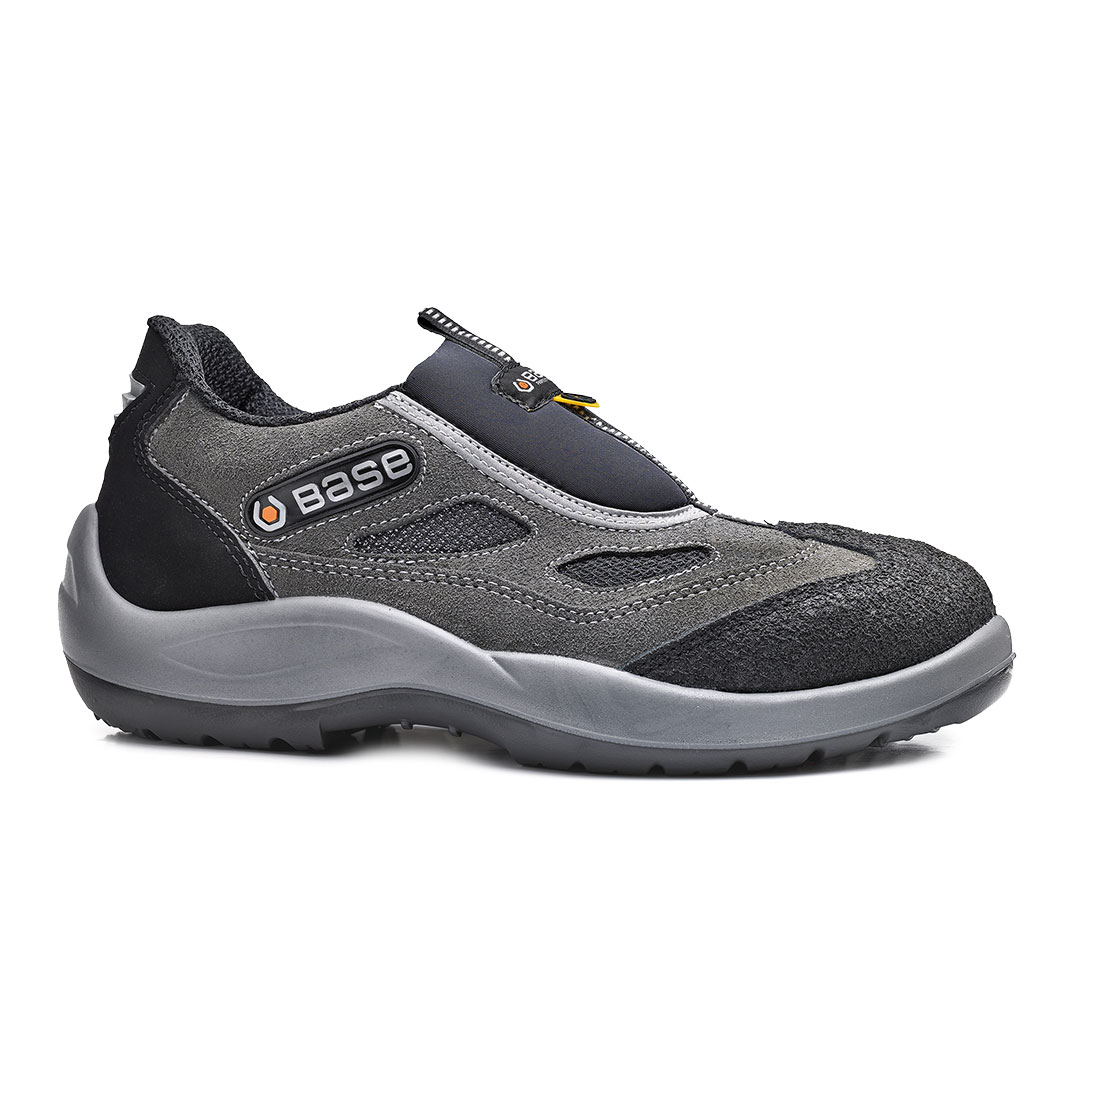 Base Quark Low Shoes Grey/Blue B0474